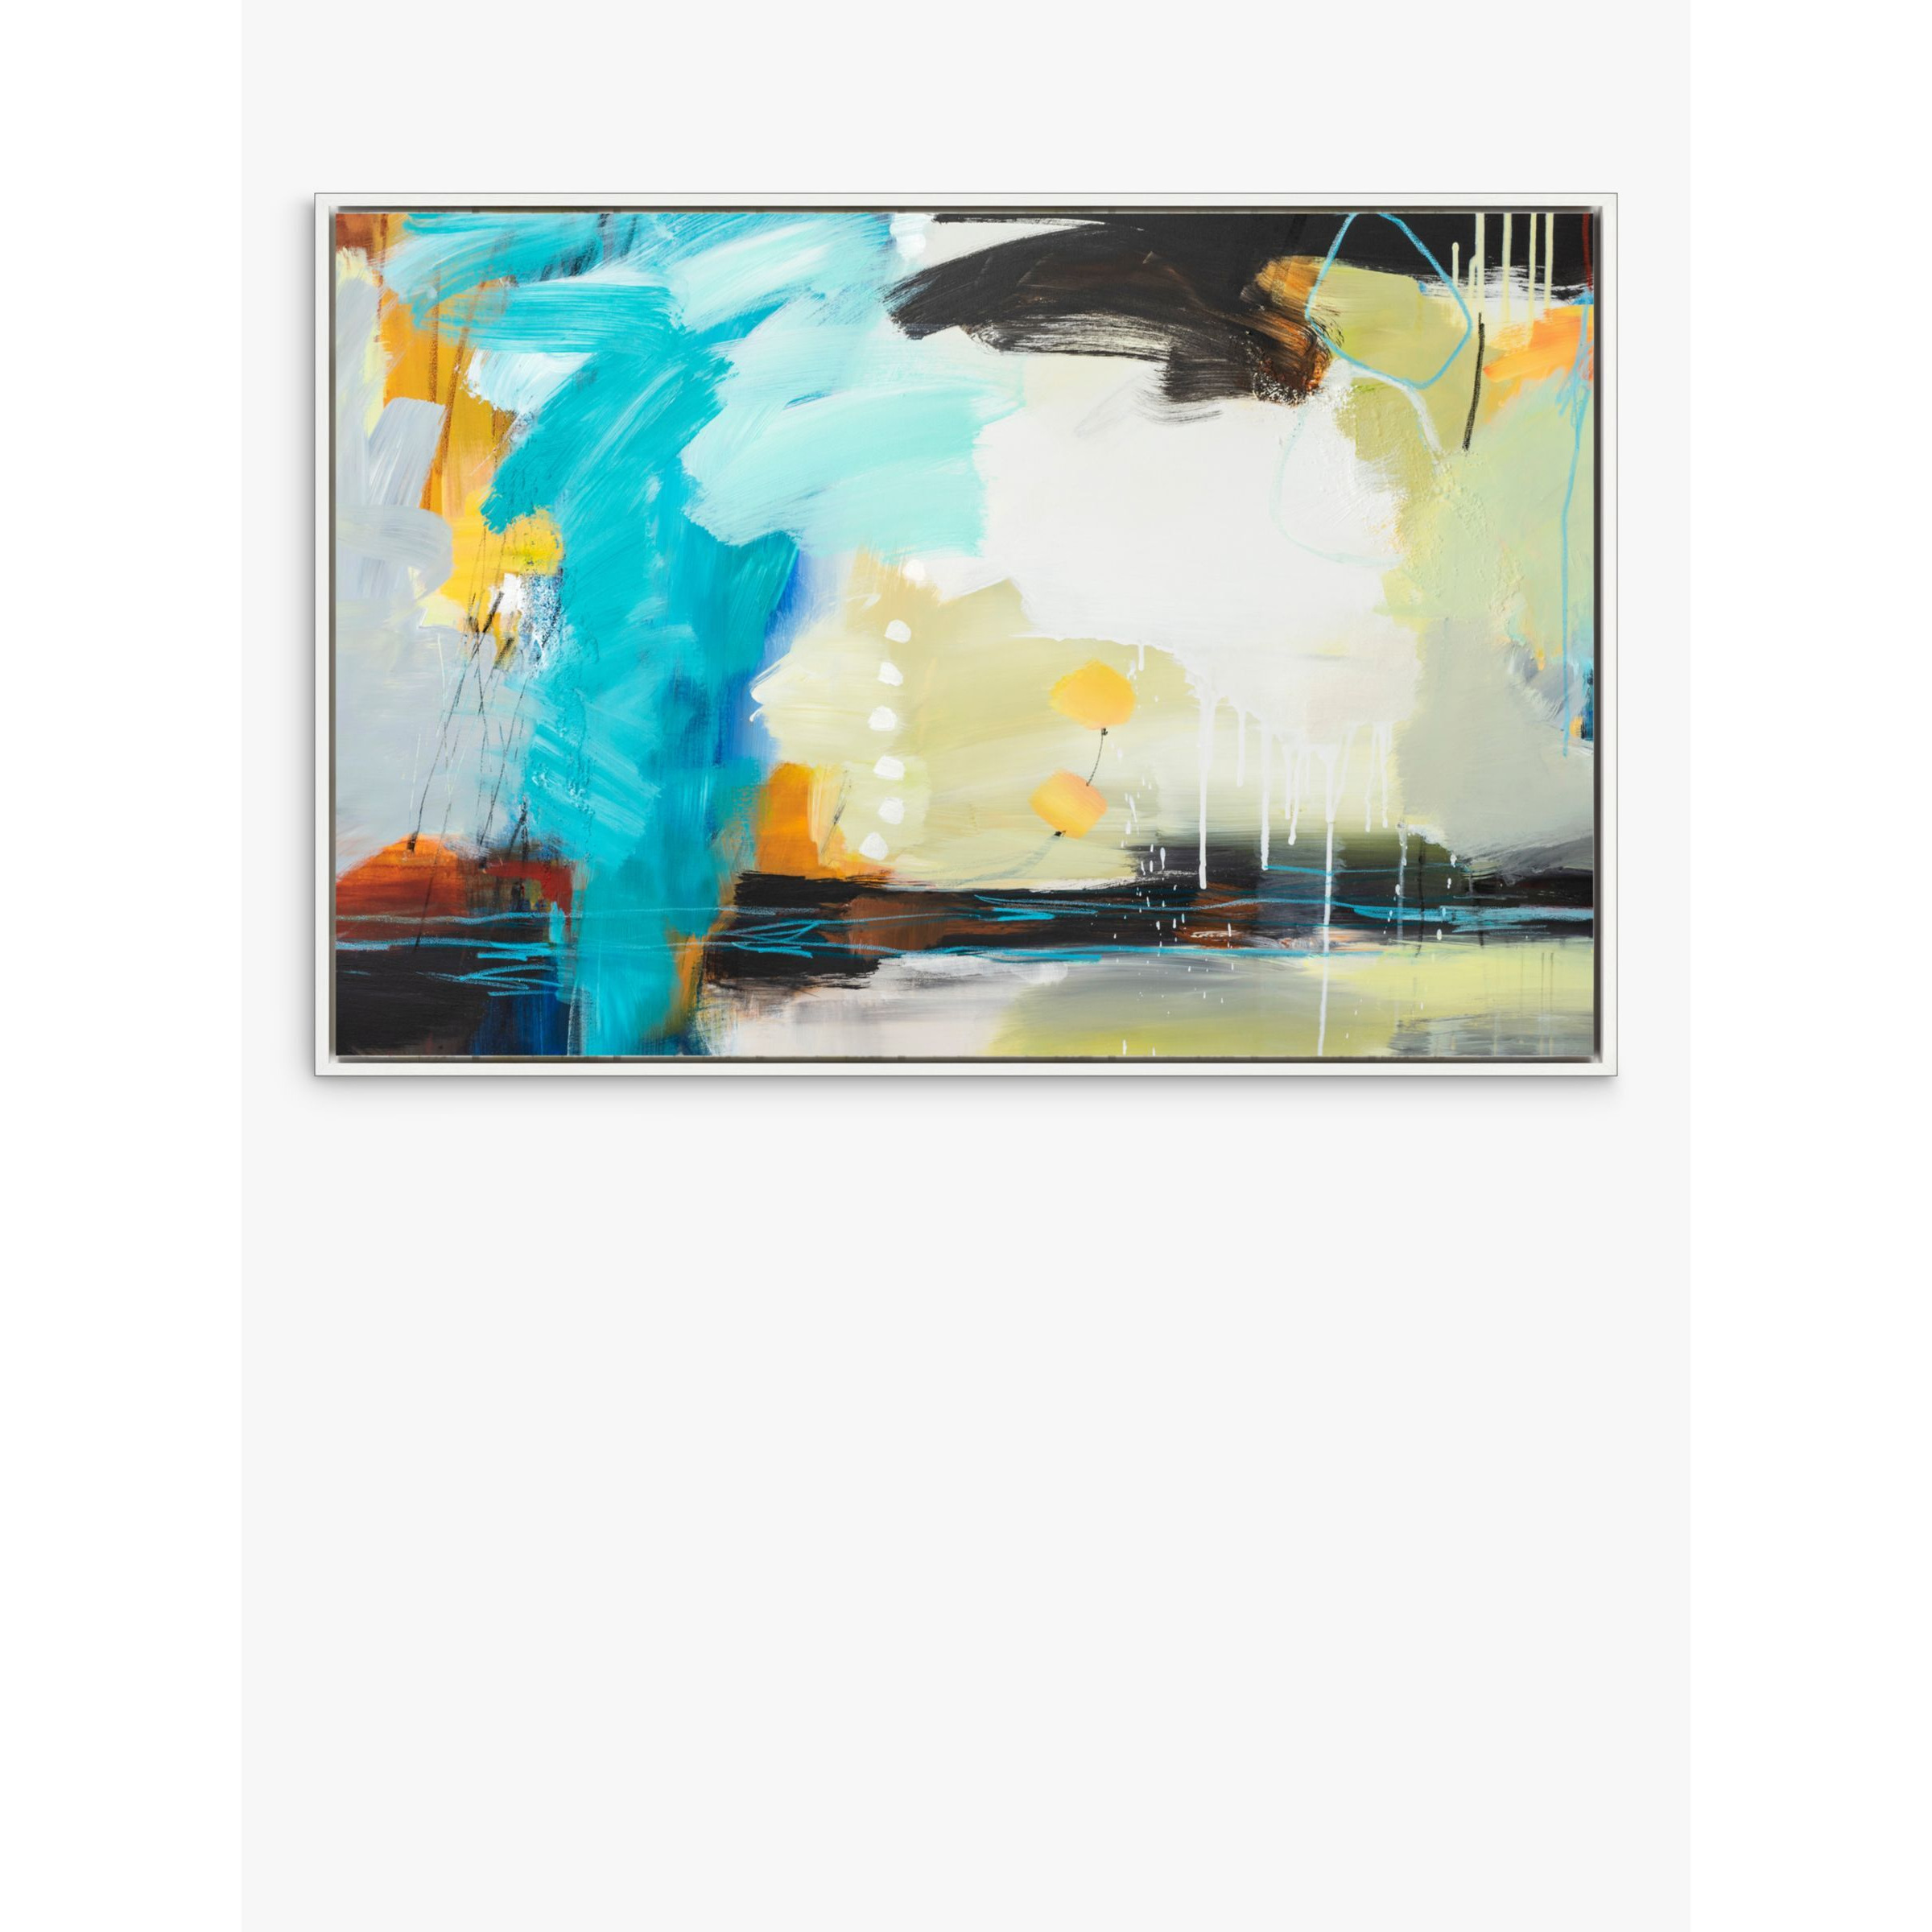 Ira Ivanova - 'Coast' Abstract Framed Canvas Prints, 84 x 124cm, Blue/Multi - image 1